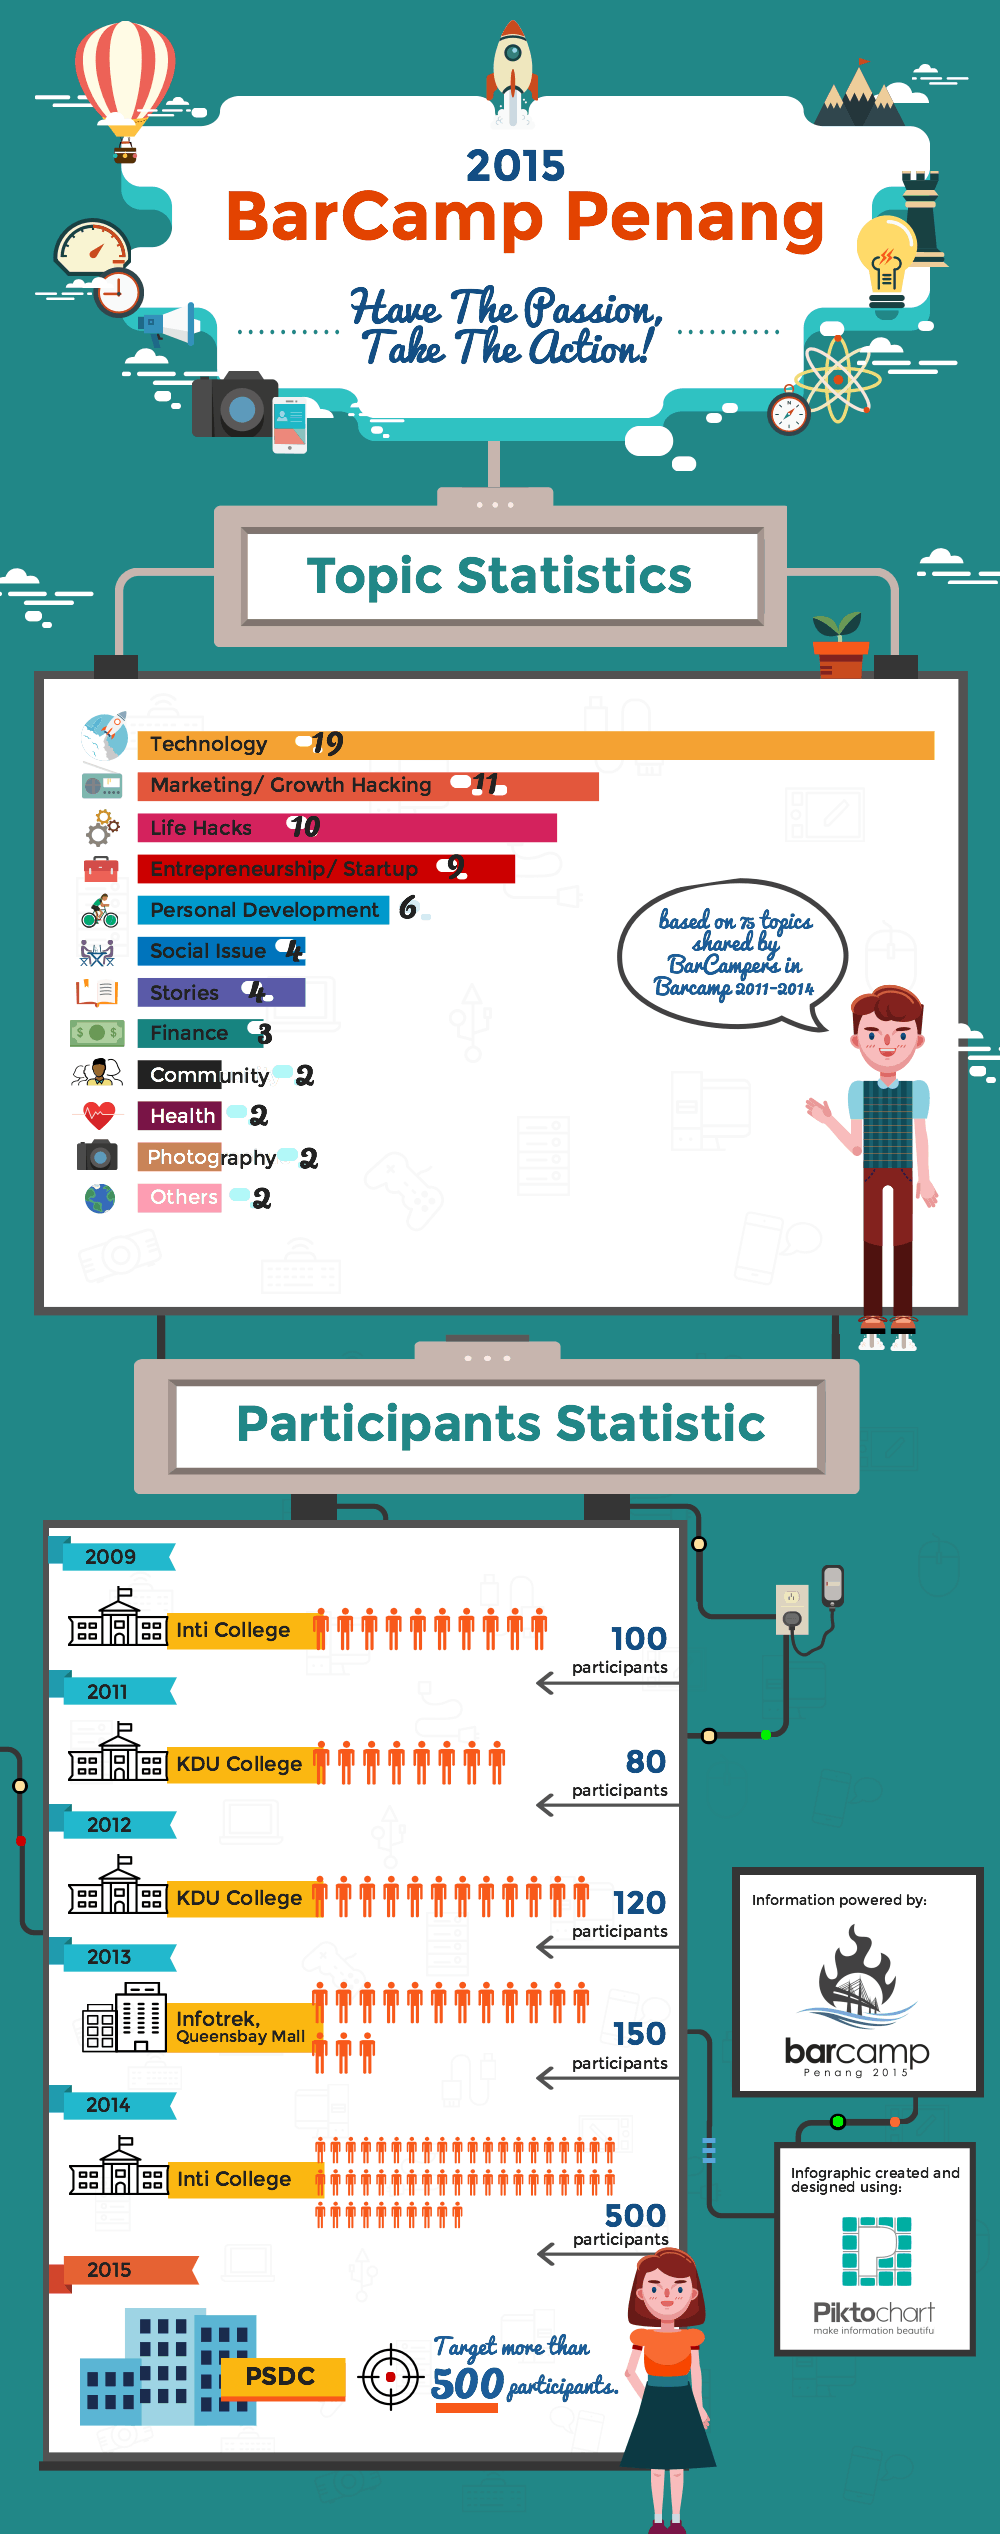 piktochart-infographic_barcamp-2015-7901651